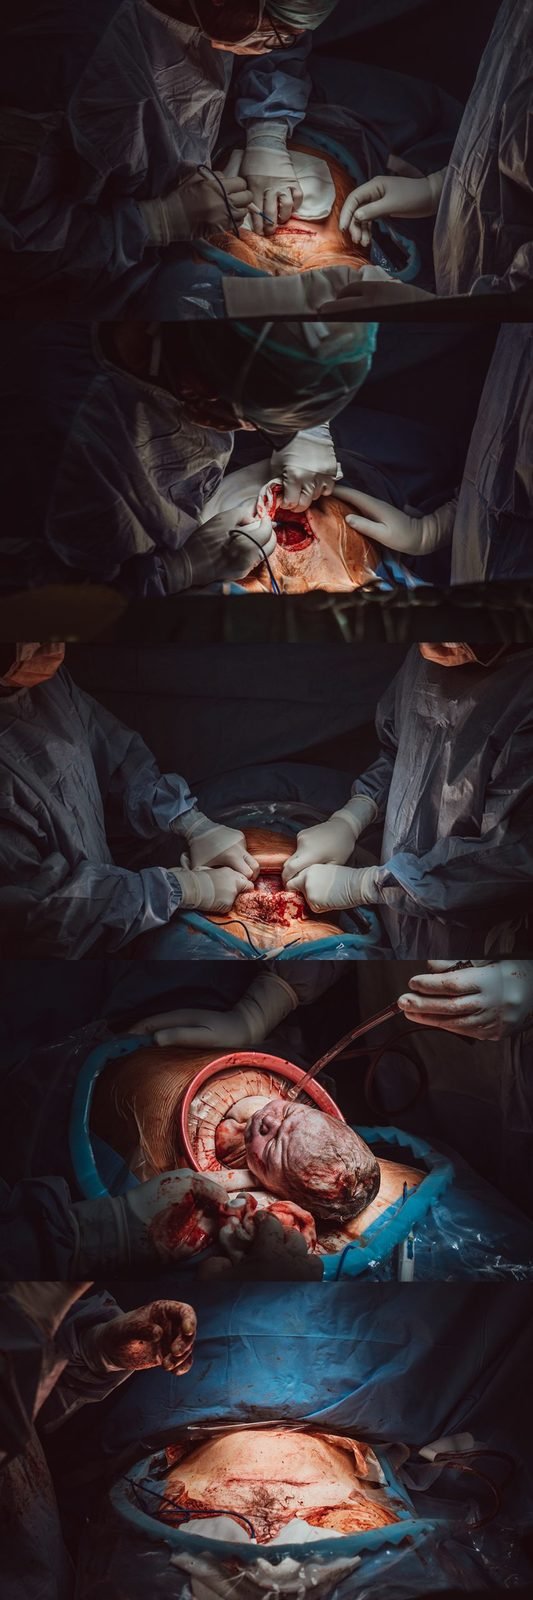 Operační porod okem Laury Brink.